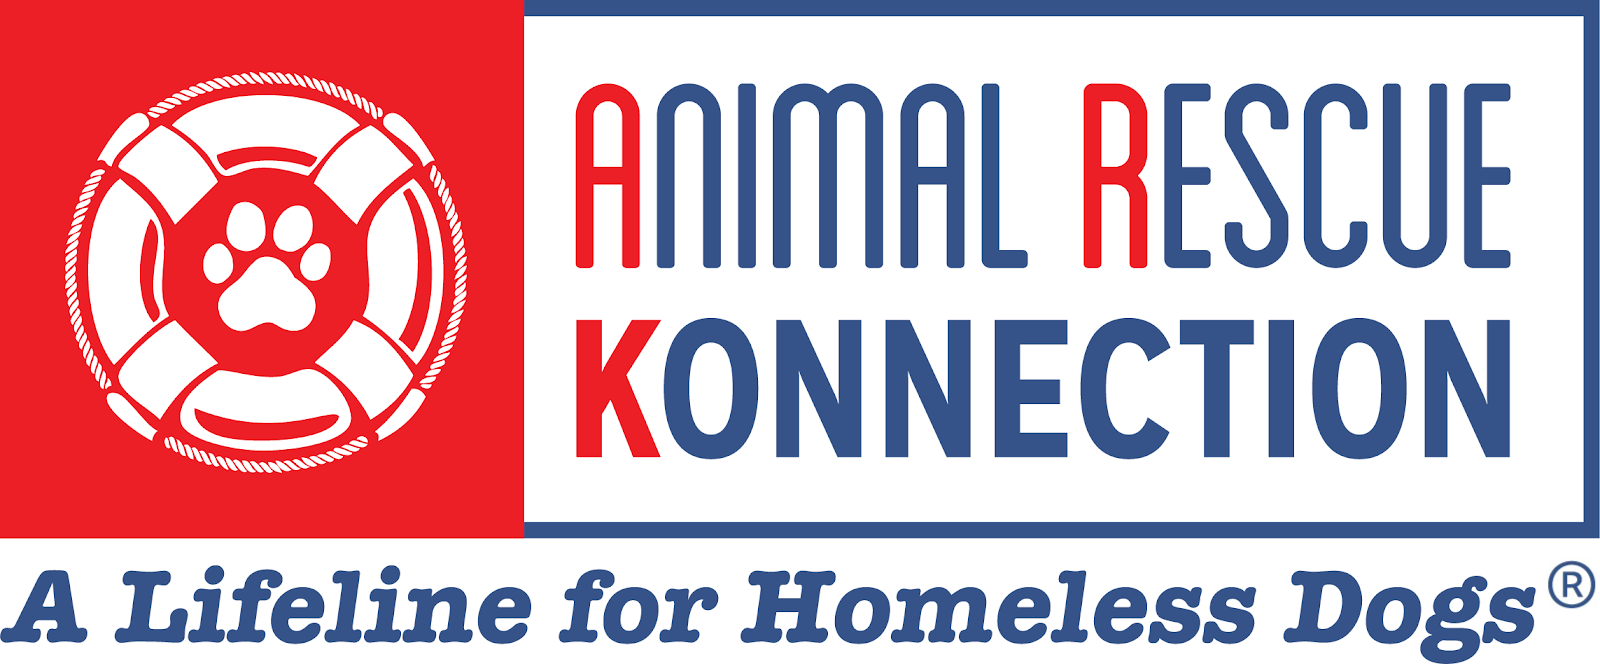 Animal Rescue Konnection